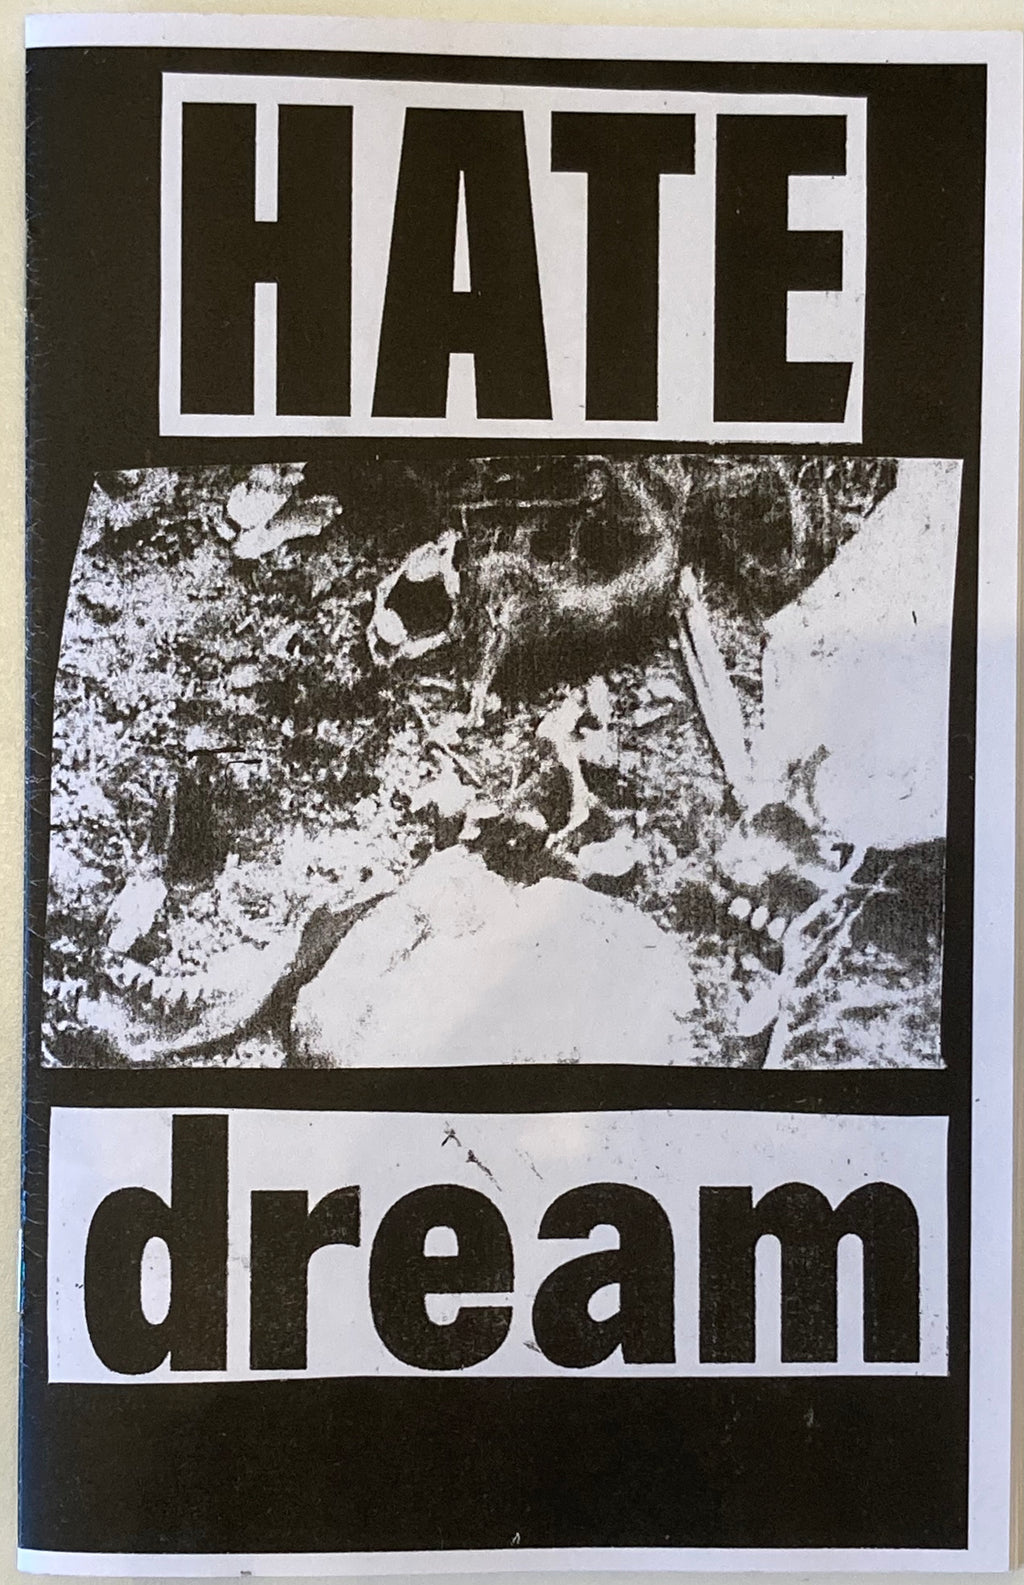 HATE DREAM